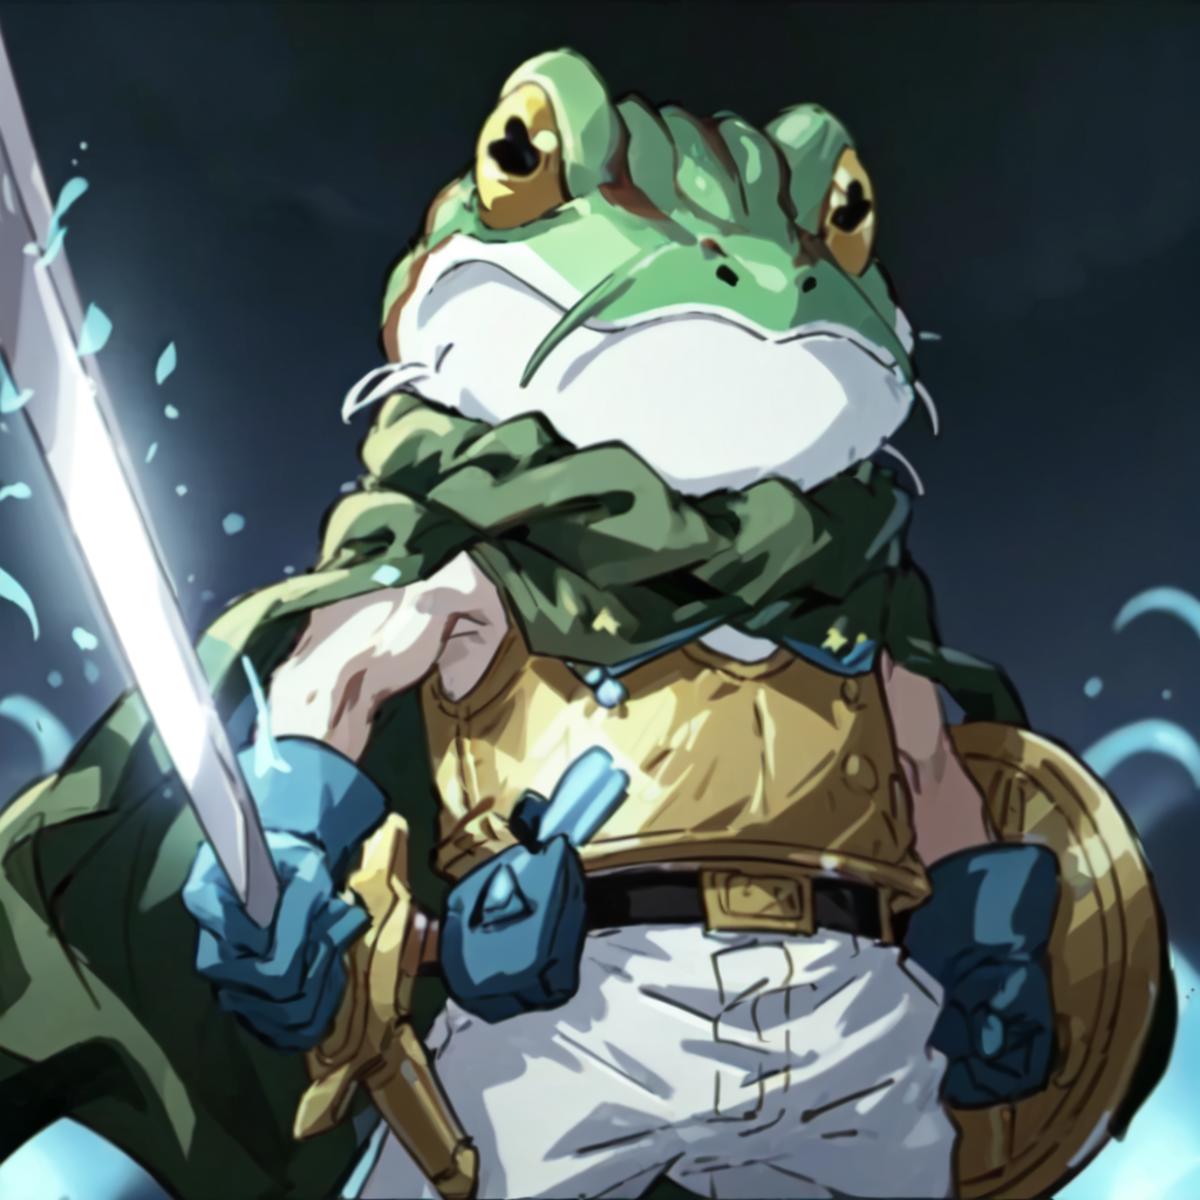 Frog (Chrono Trigger) image by NostalgiaForever